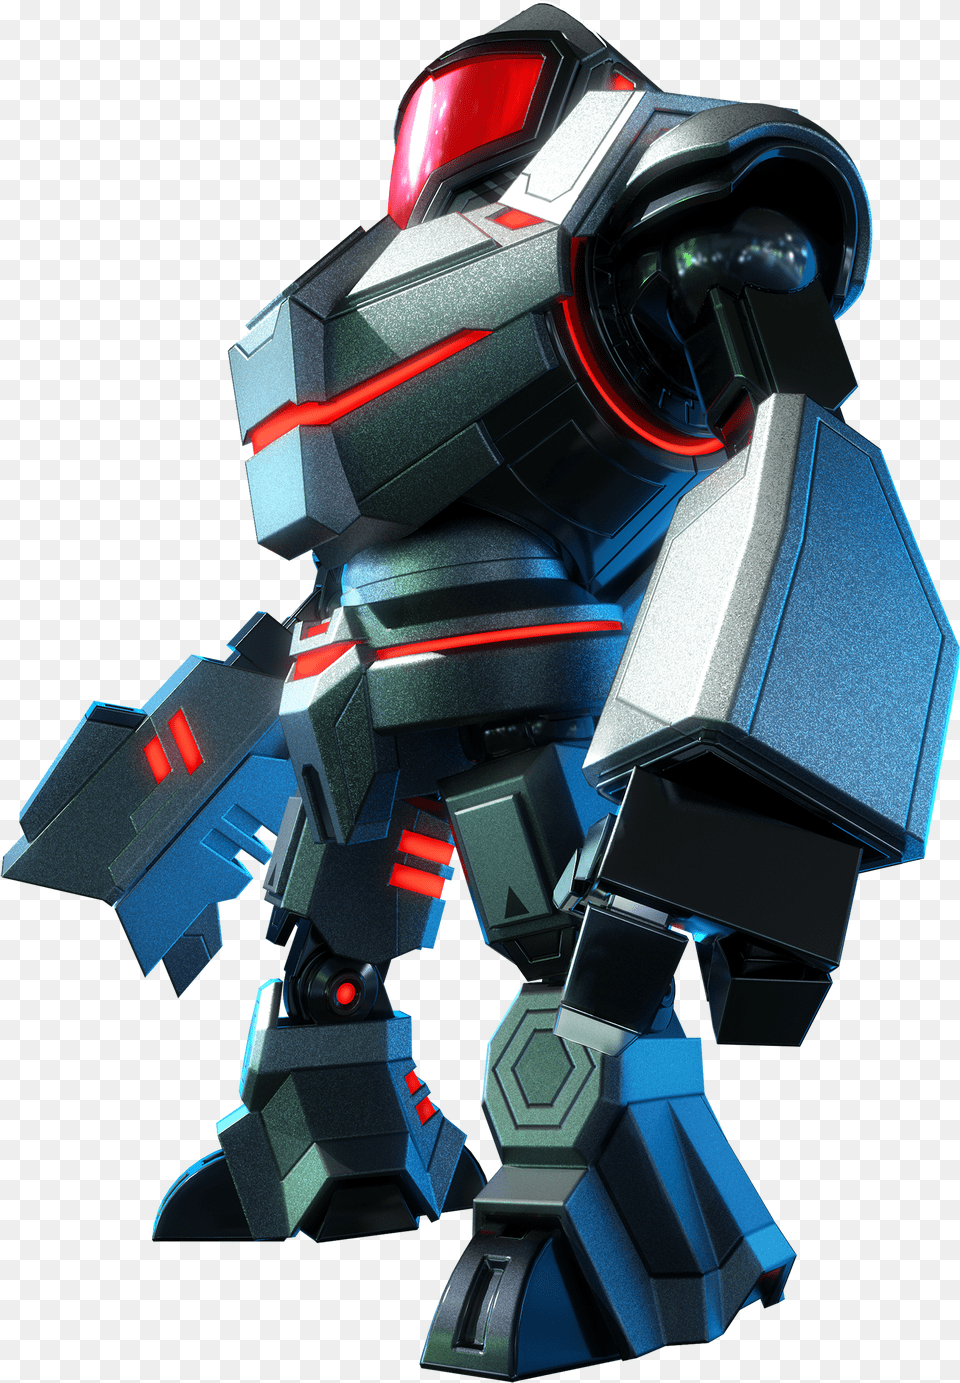 Metroid Prime Federation Force Mech, Lamp, Firearm, Gun, Rifle Free Transparent Png